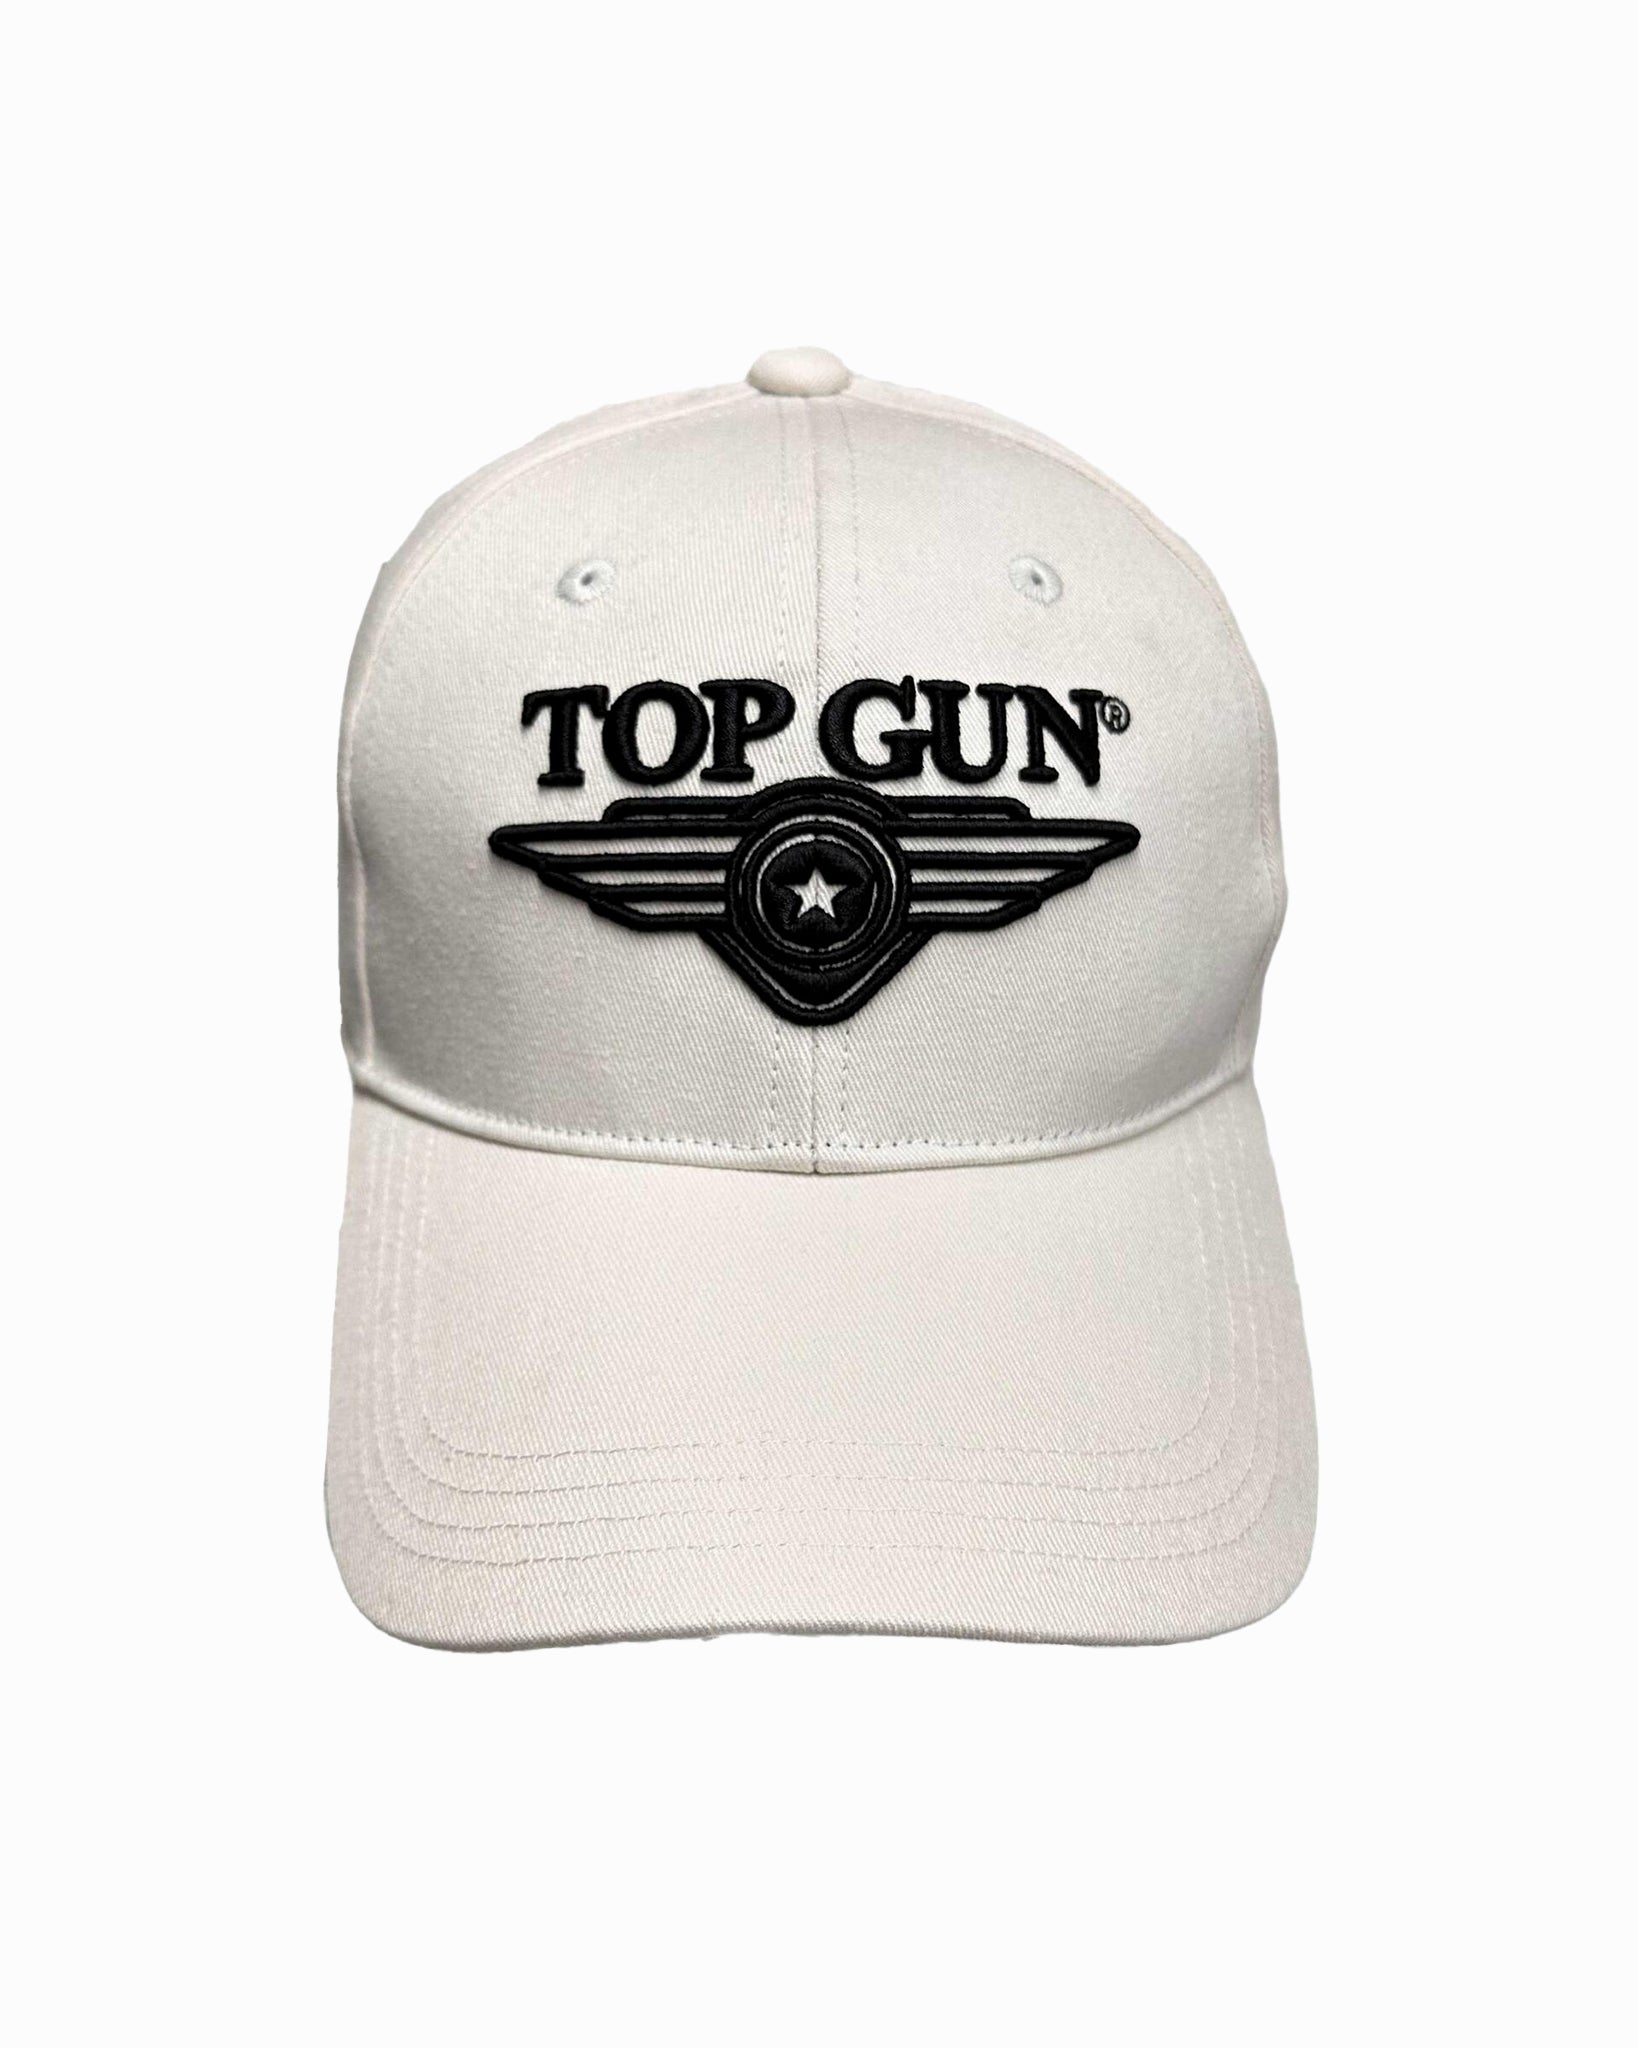 TOP GUN® 3D Gun – CAP Store LOGO Top